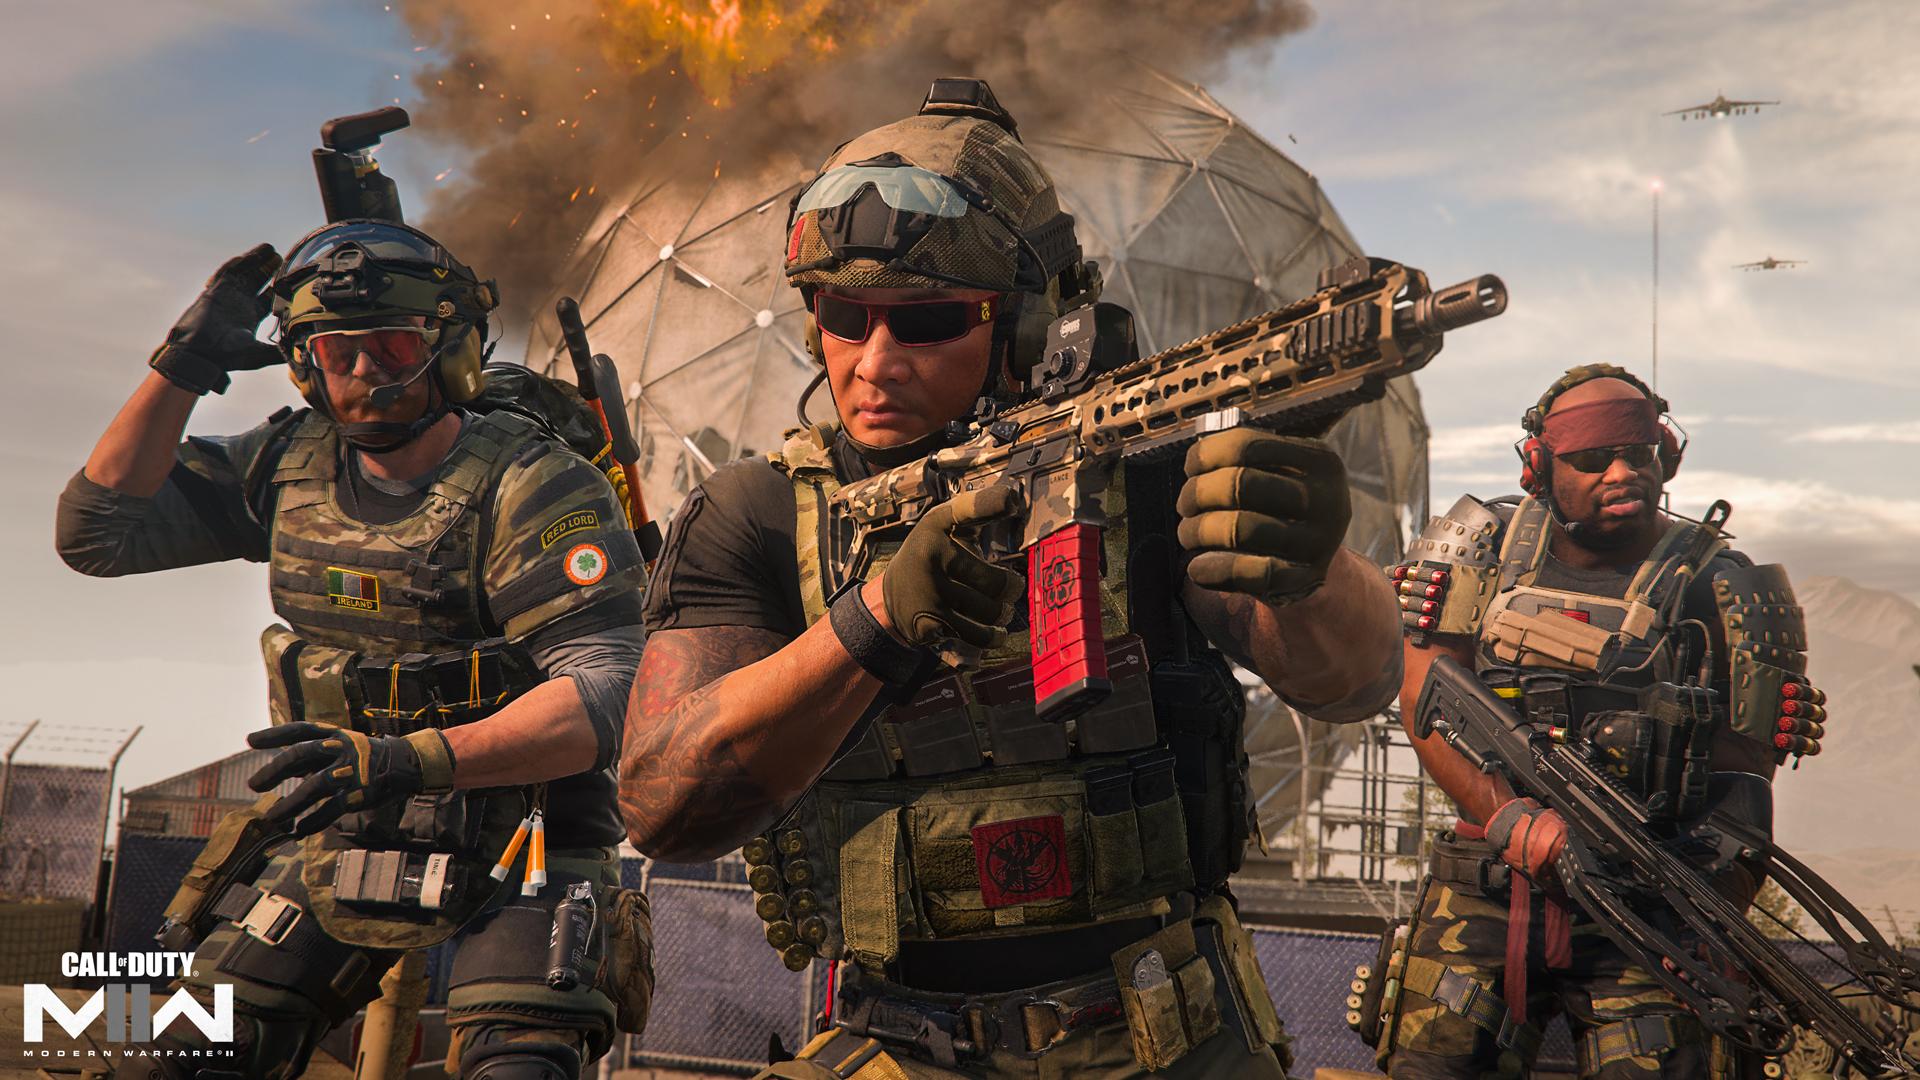 How to play Modern Warfare 2 multiplayer free access: Season 5 dates -  Charlie INTEL